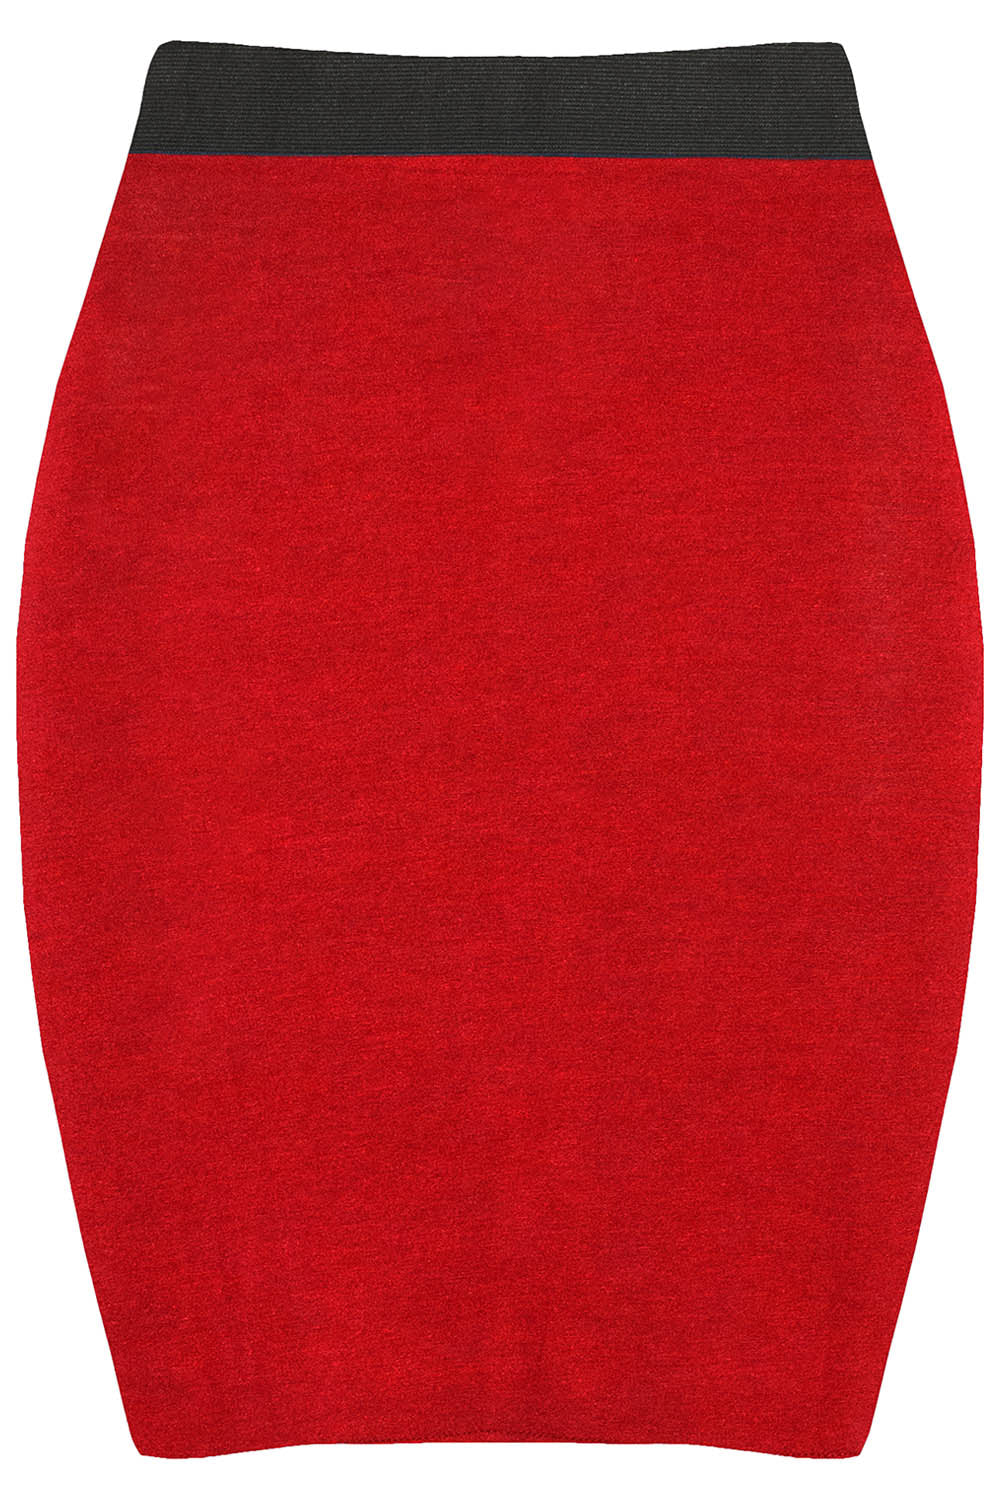 High Waisted Red Mini Tube Skirt - bejealous-com